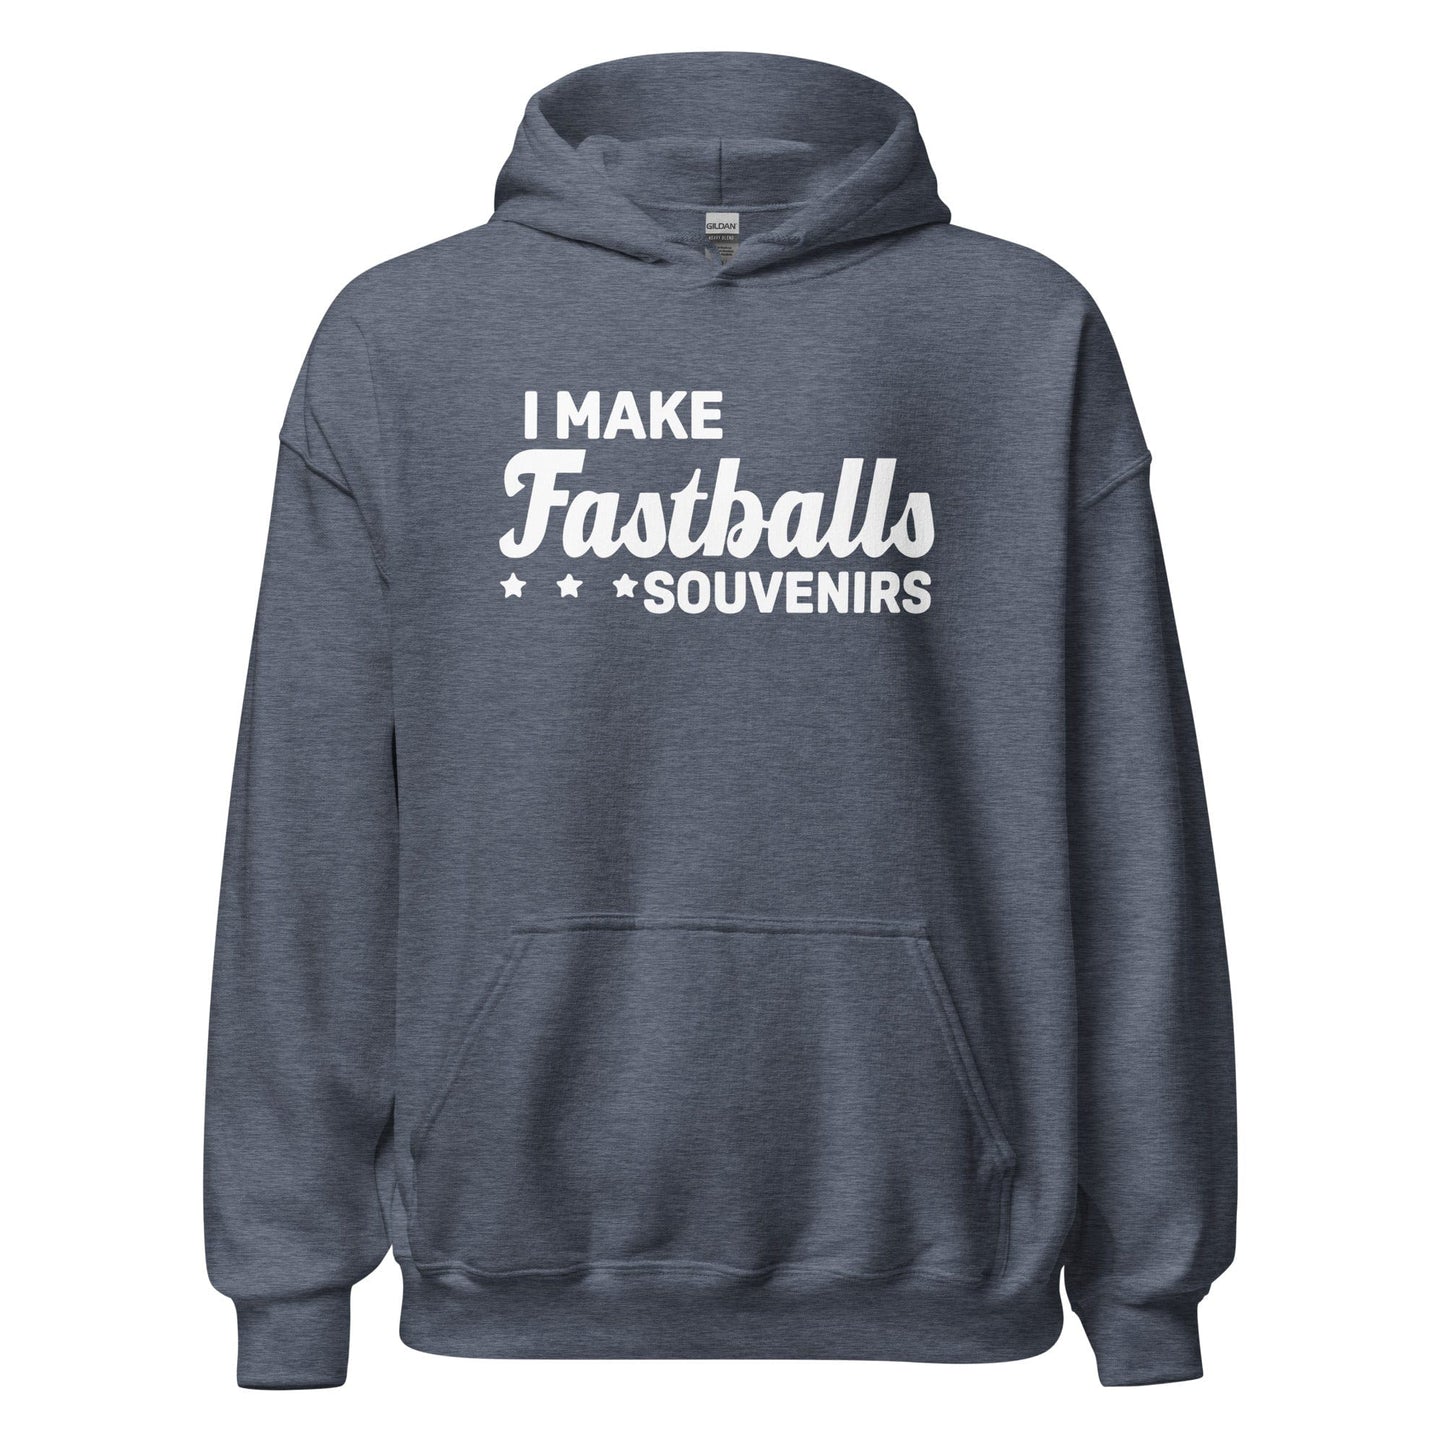 I Make Fastballs Souvenirs - Adult Hoodie